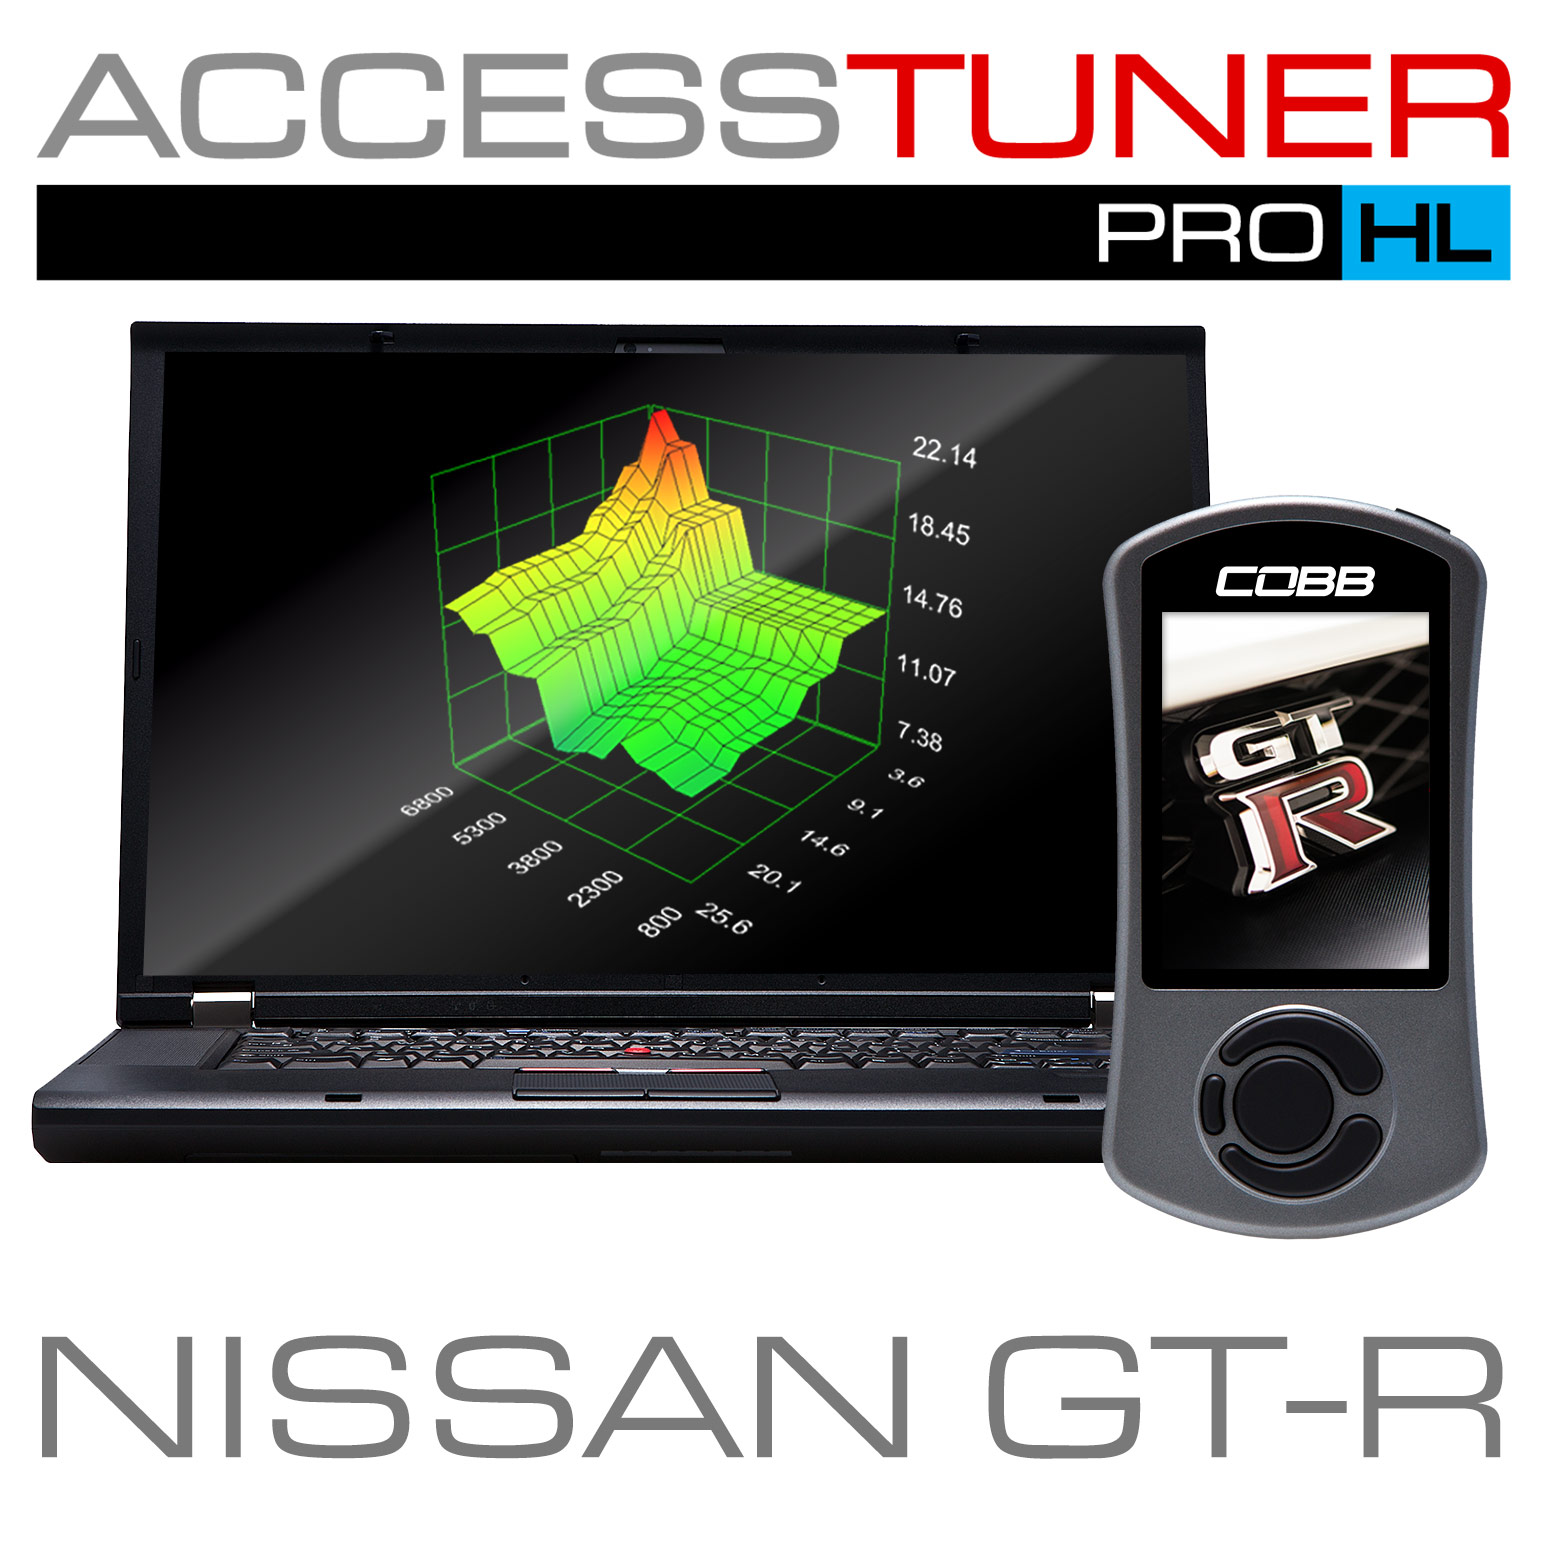 COBB Tuning Nissan GT-R Accesstuner Pro HL